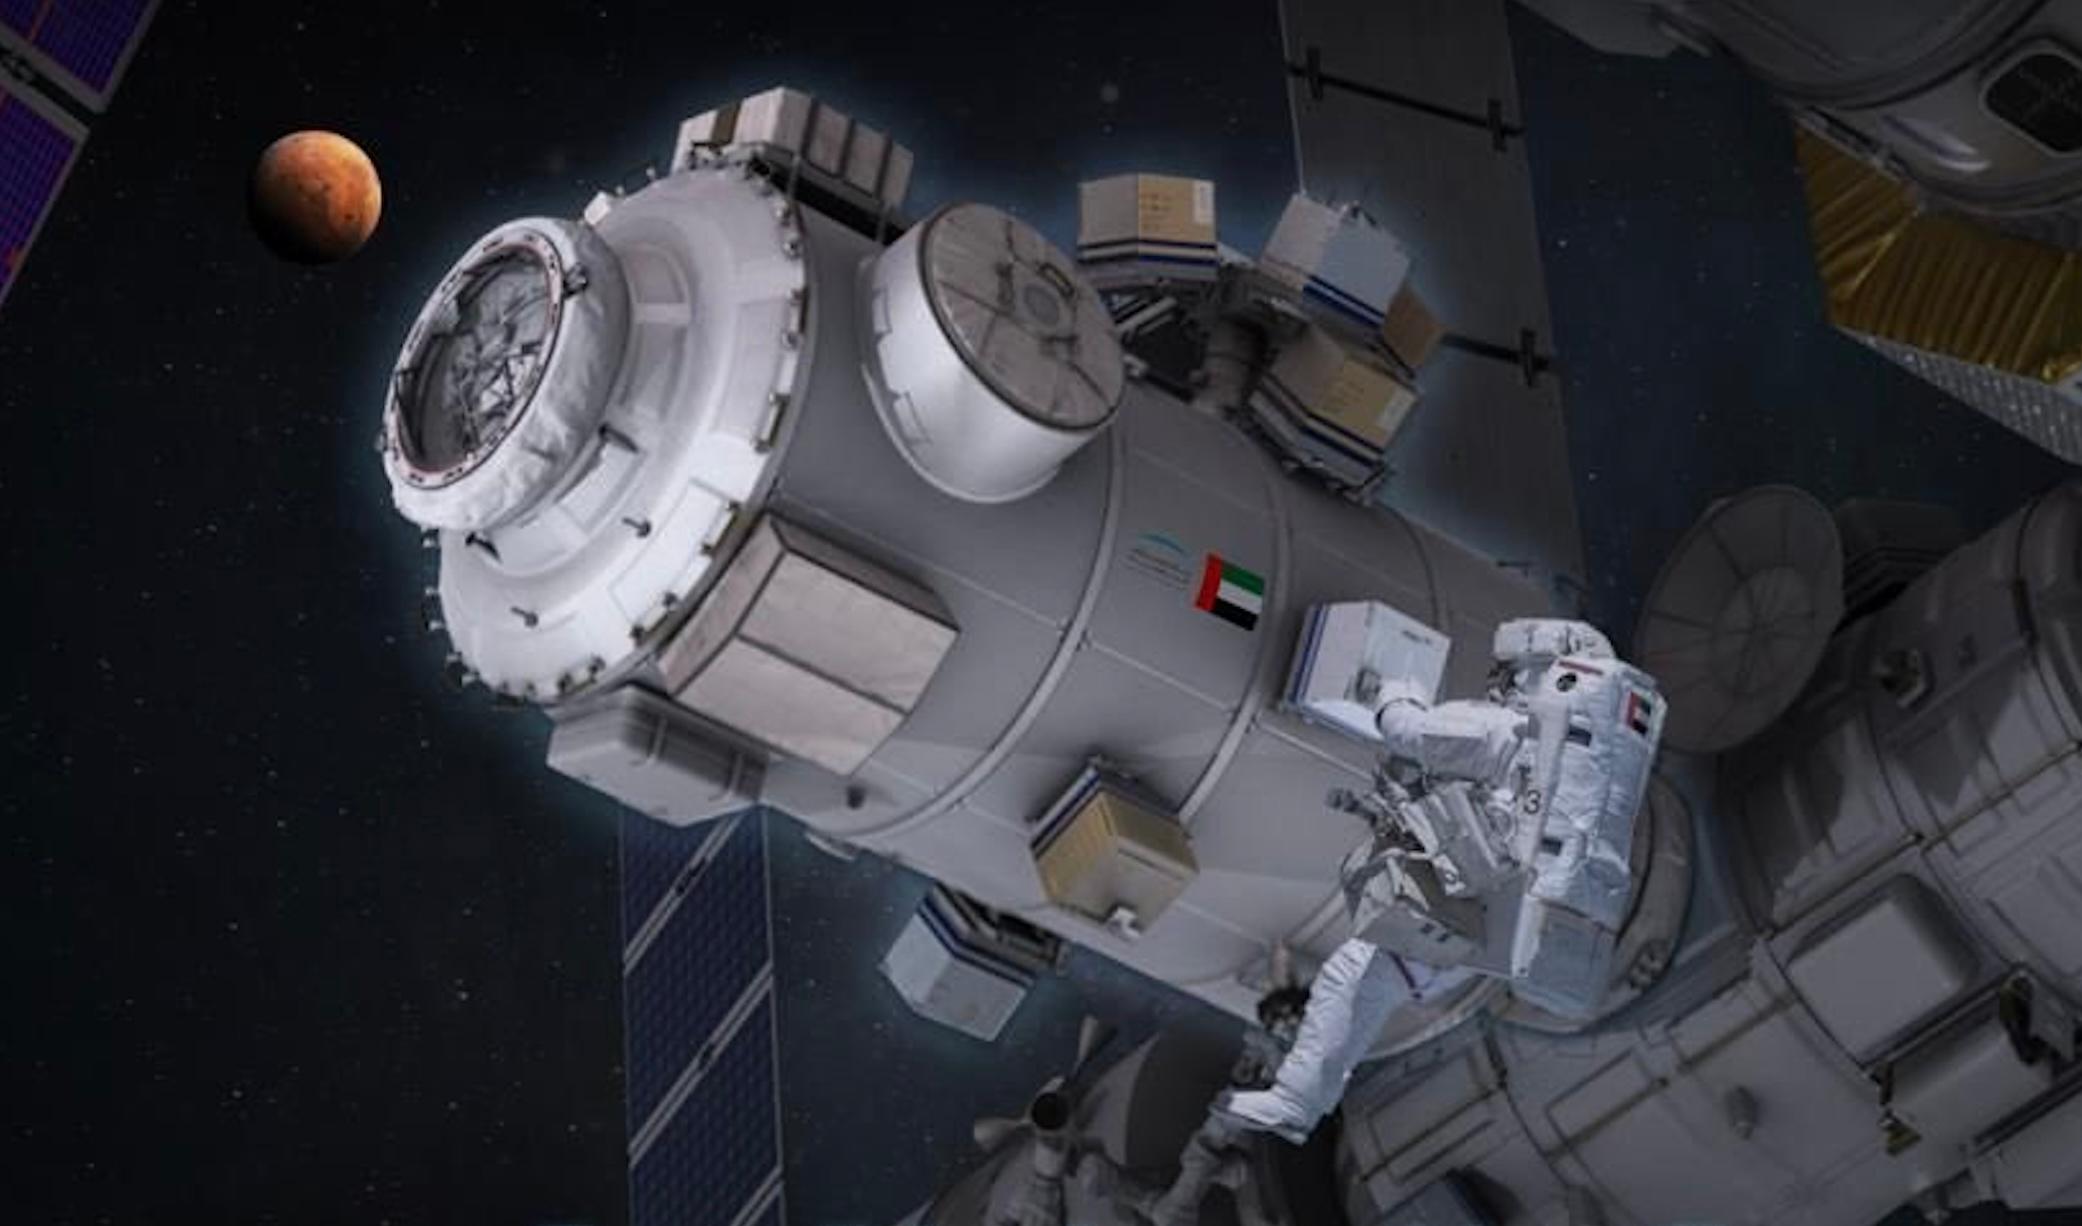 The UAE is sending the first Emirati astronaut to lunar orbit